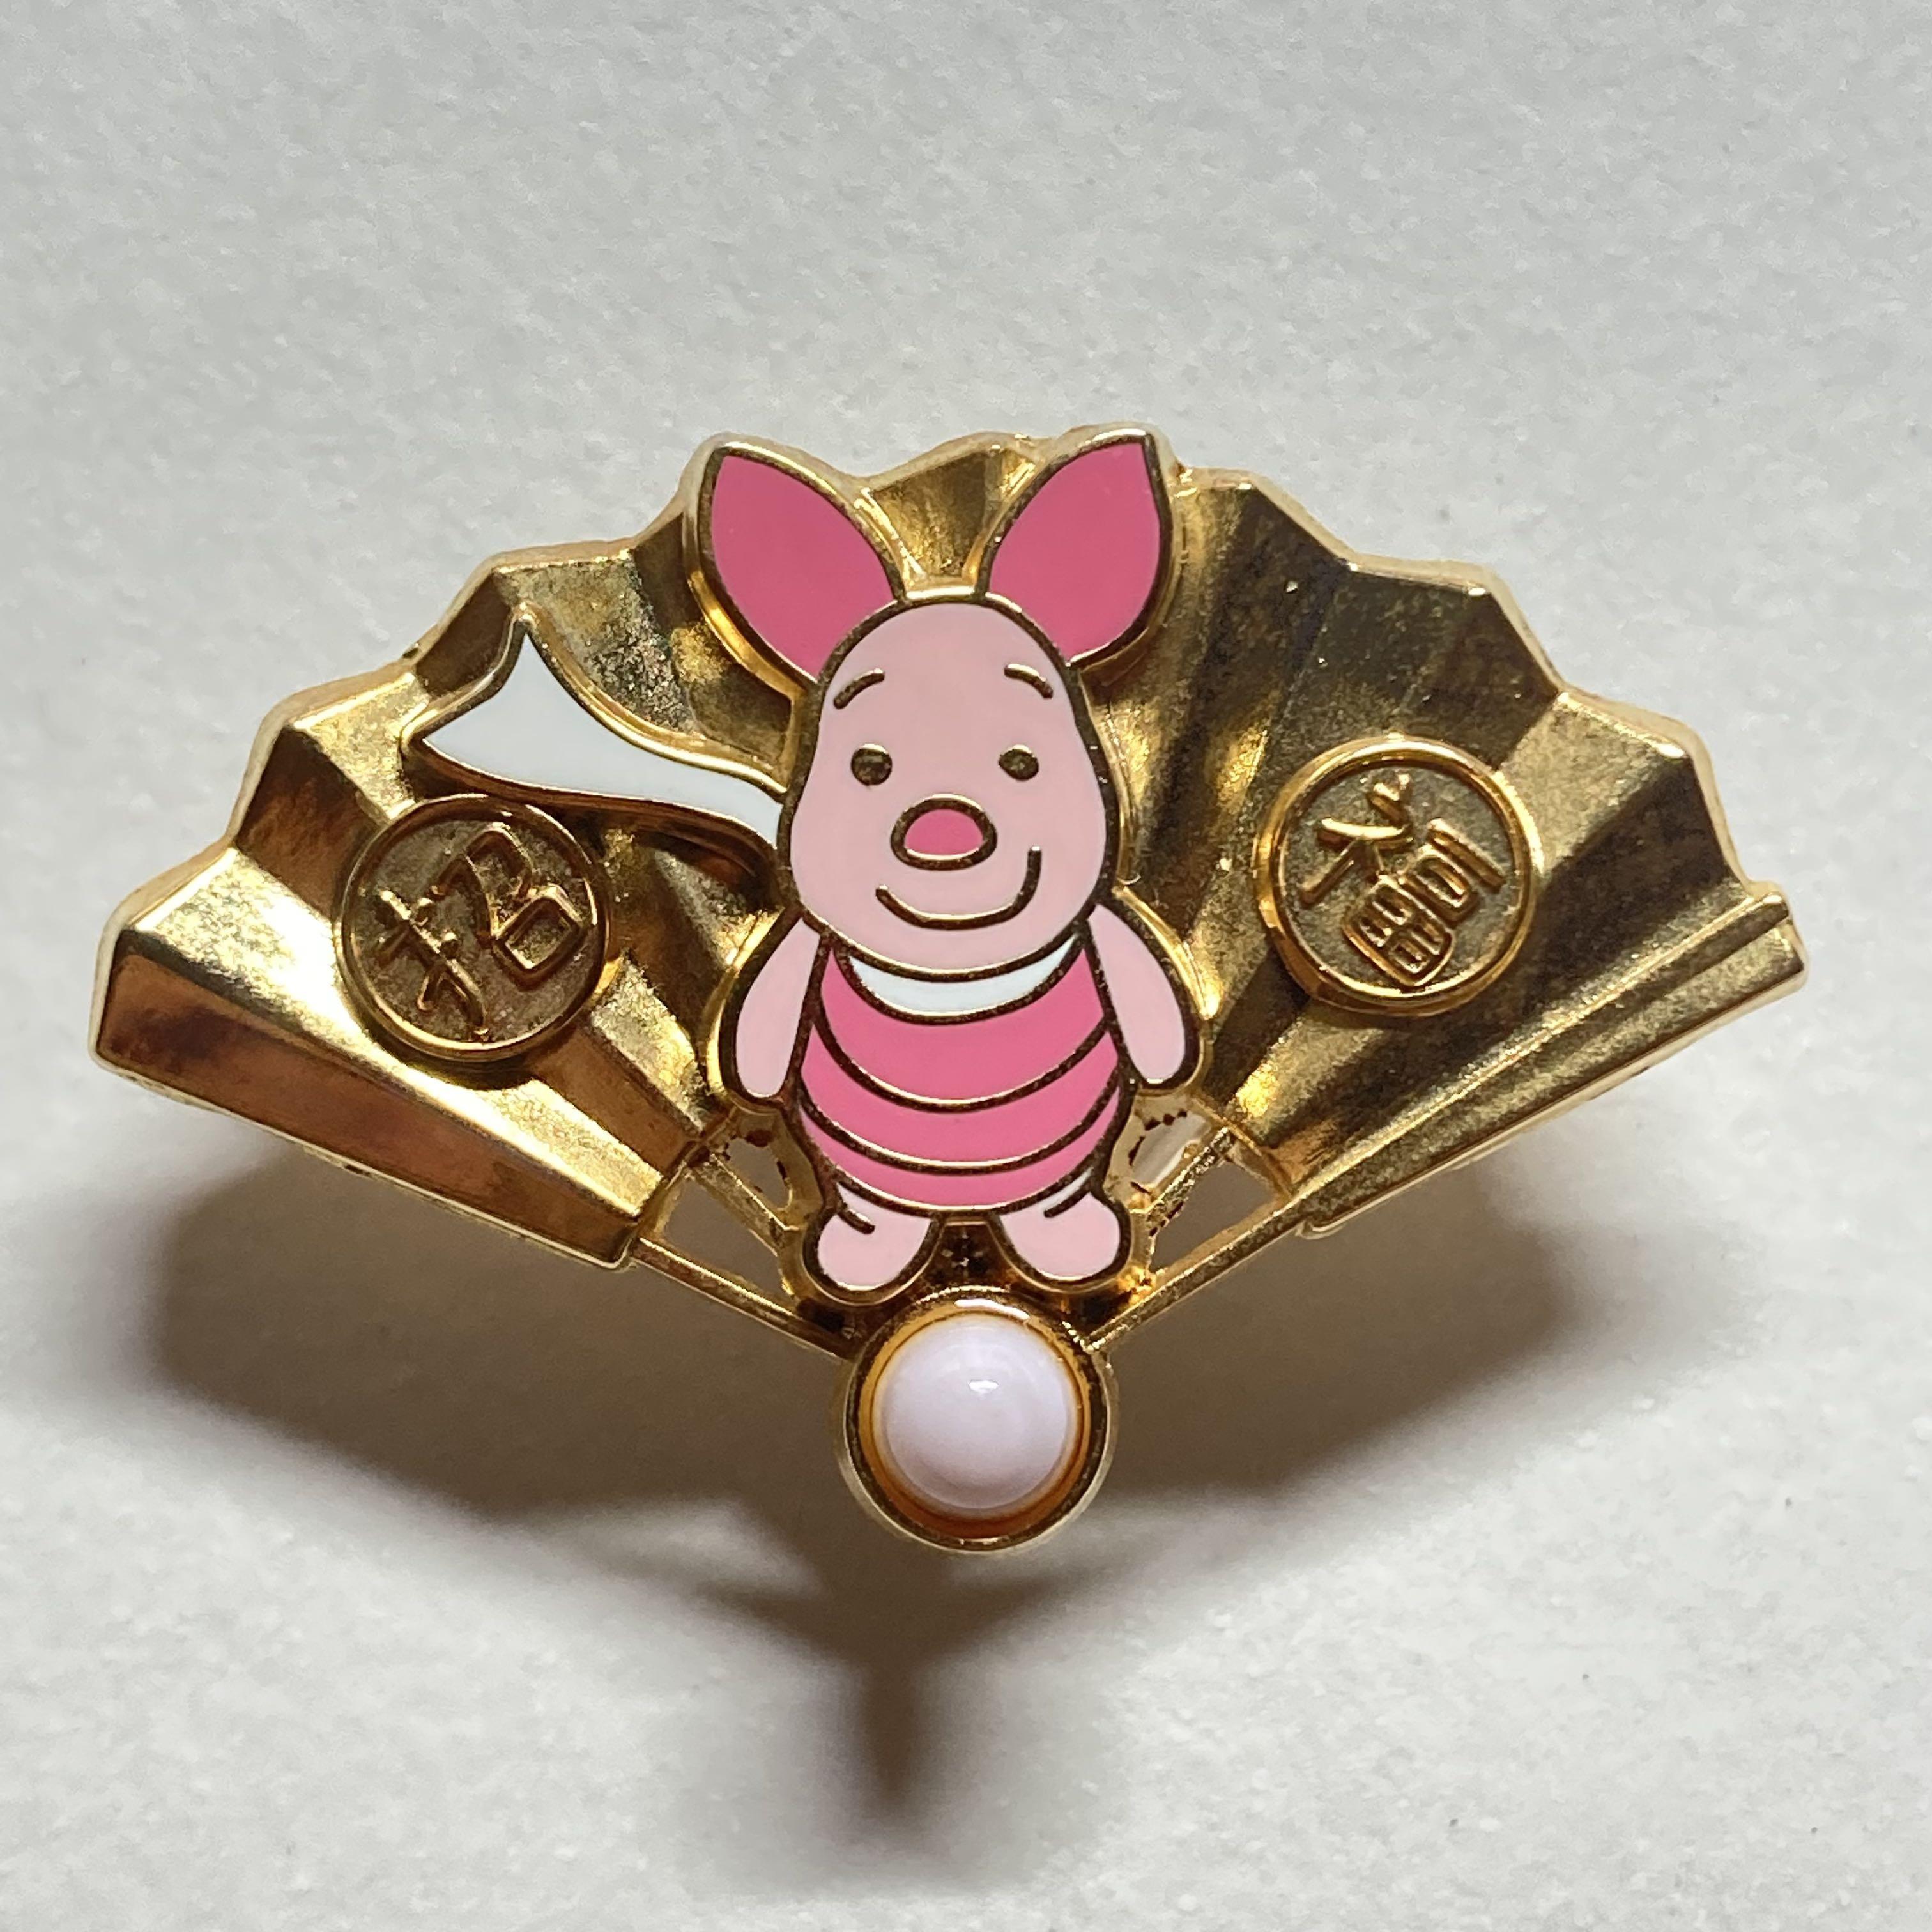 Japan Disney Pin Piglet Pooh Japan Disney Store New Year Omikuji